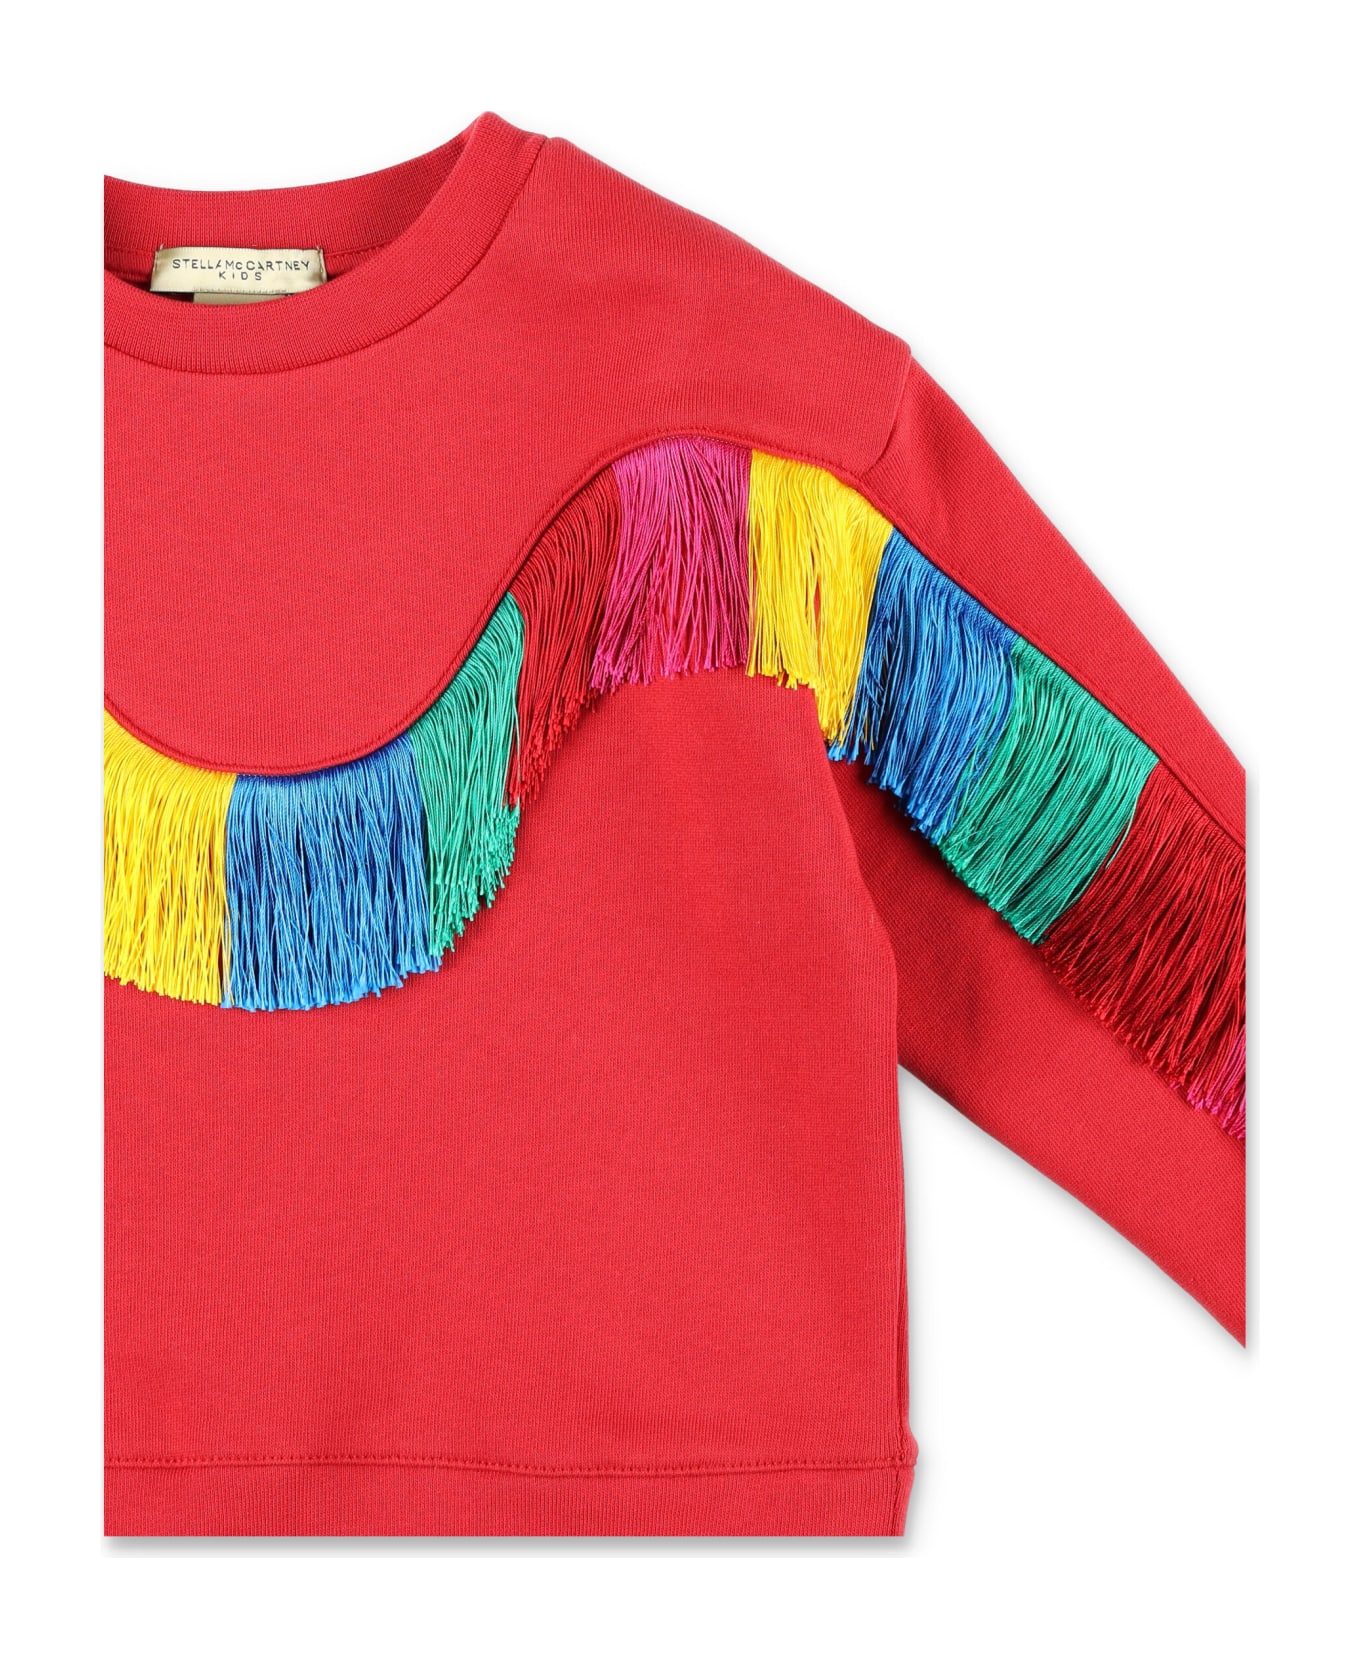 Stella McCartney Kids Rainbow Fringed Sweatshirt - RED